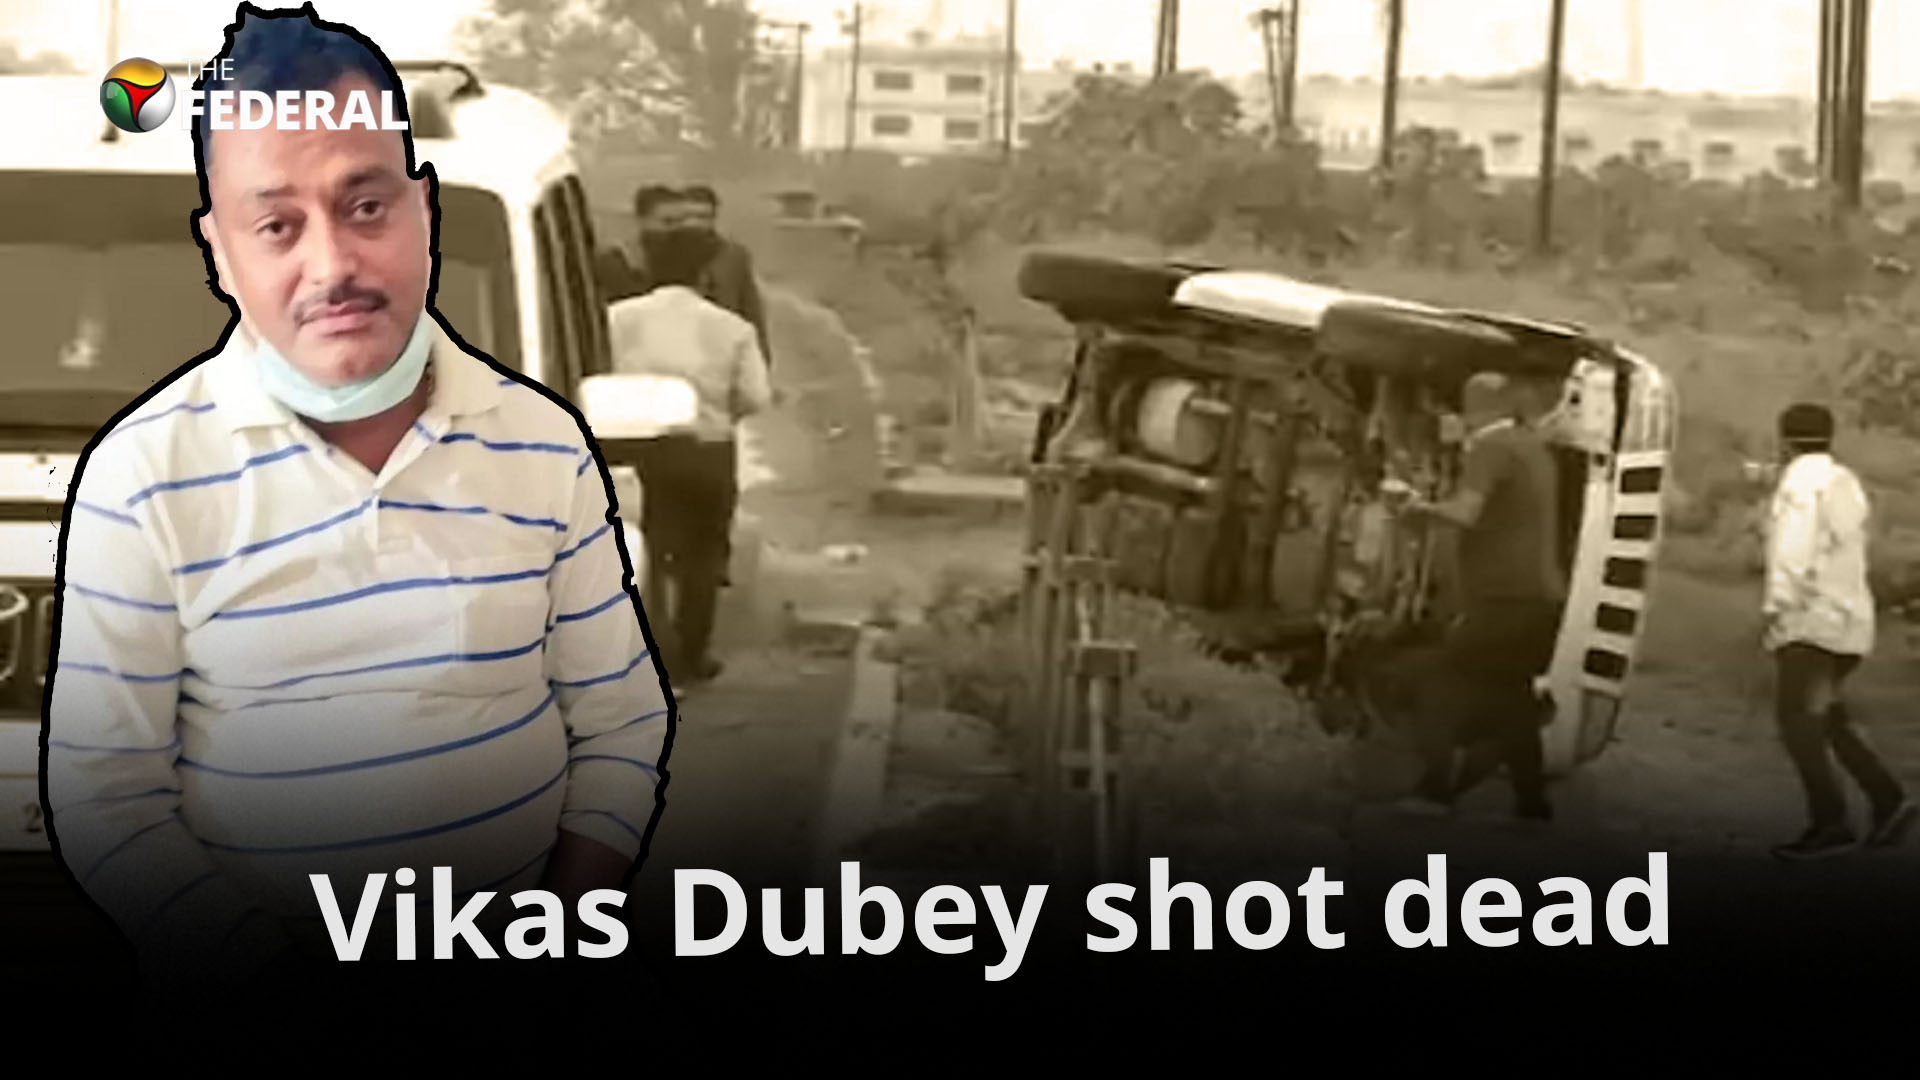 Vikas Dubey encounter: Many questions left unanswered